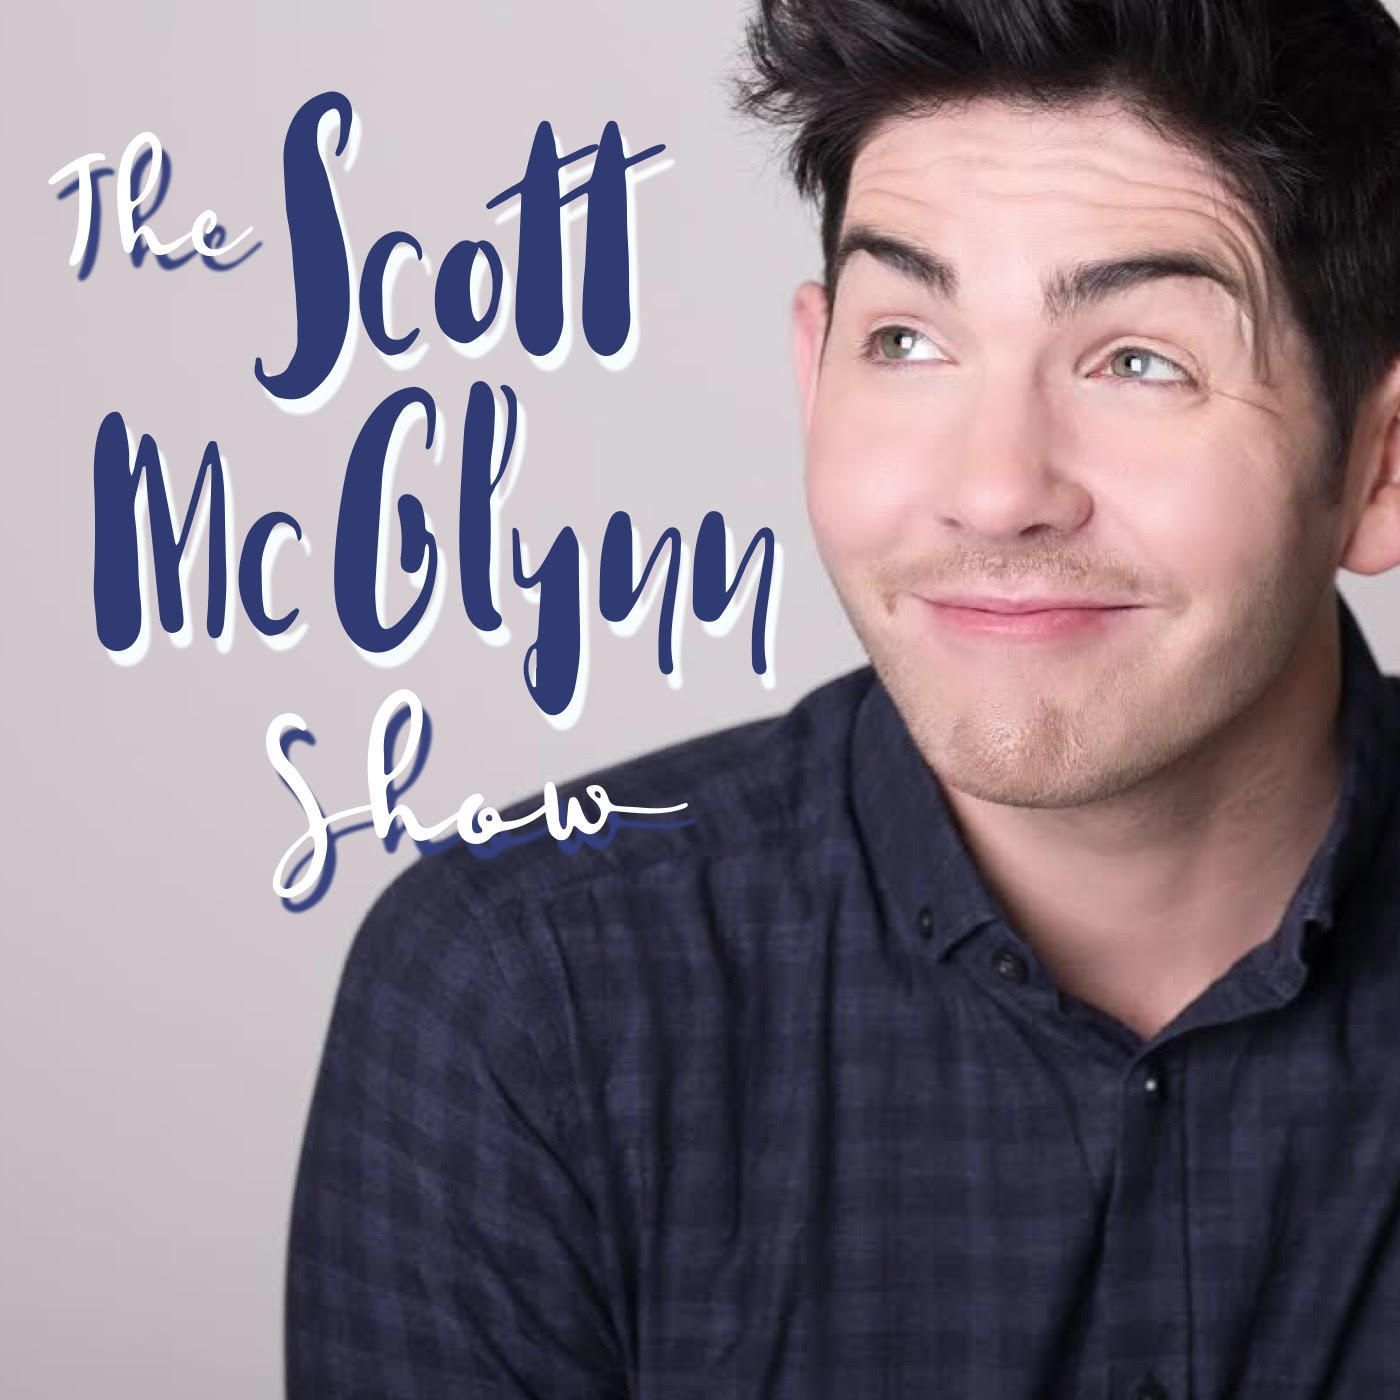 The Scott McGlynn Show